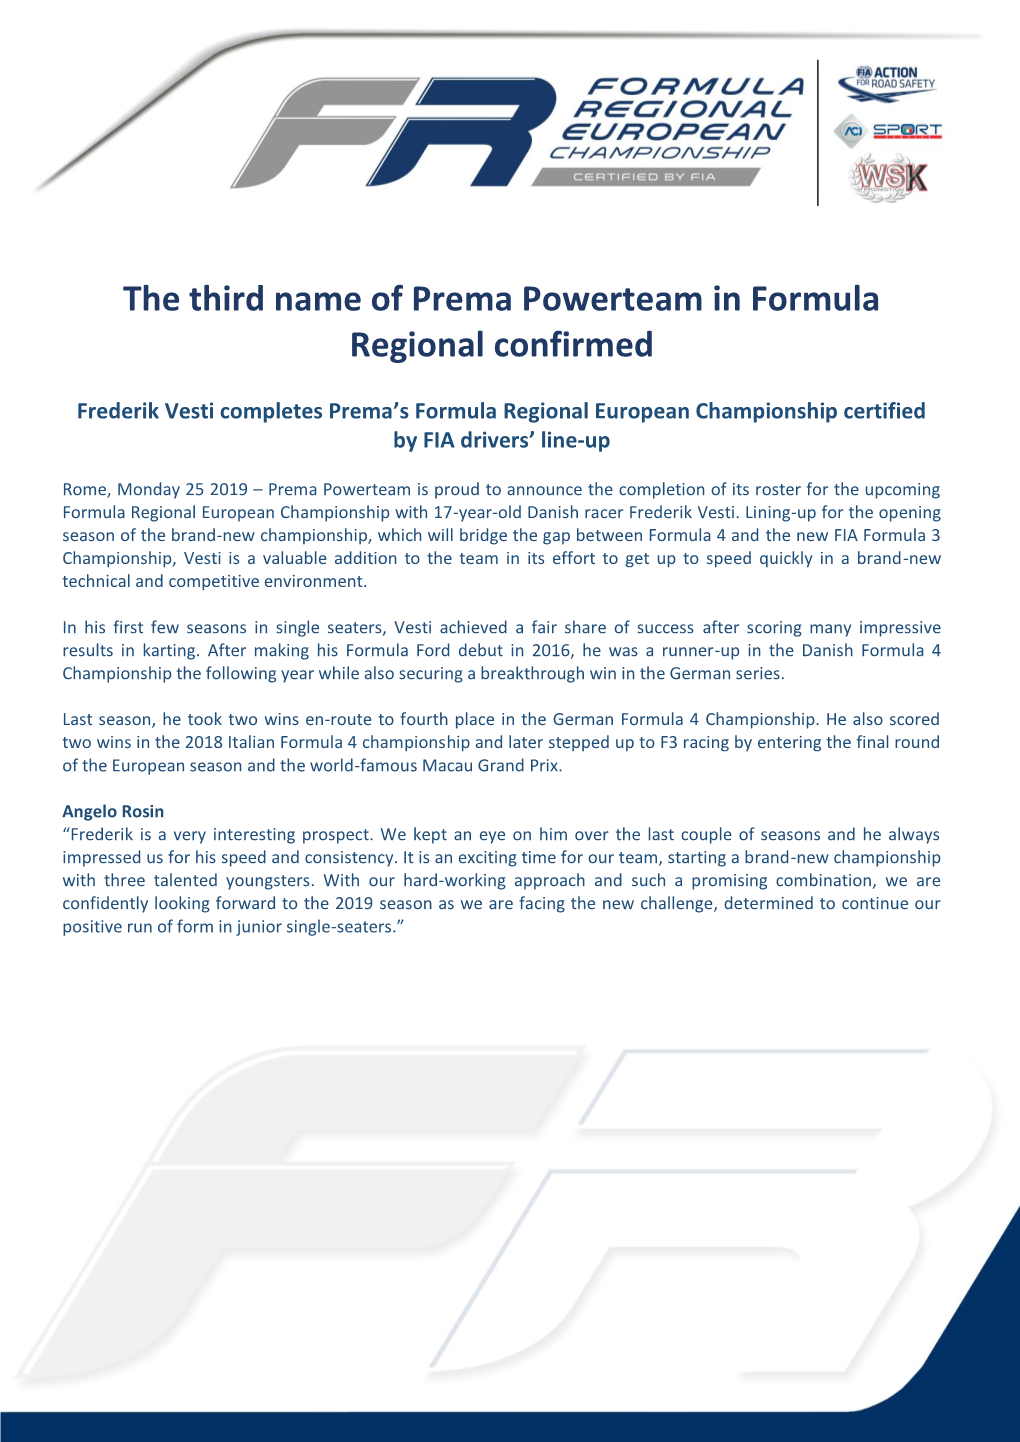 The Third Name of Prema Powerteam in Formula Regional Confirmed